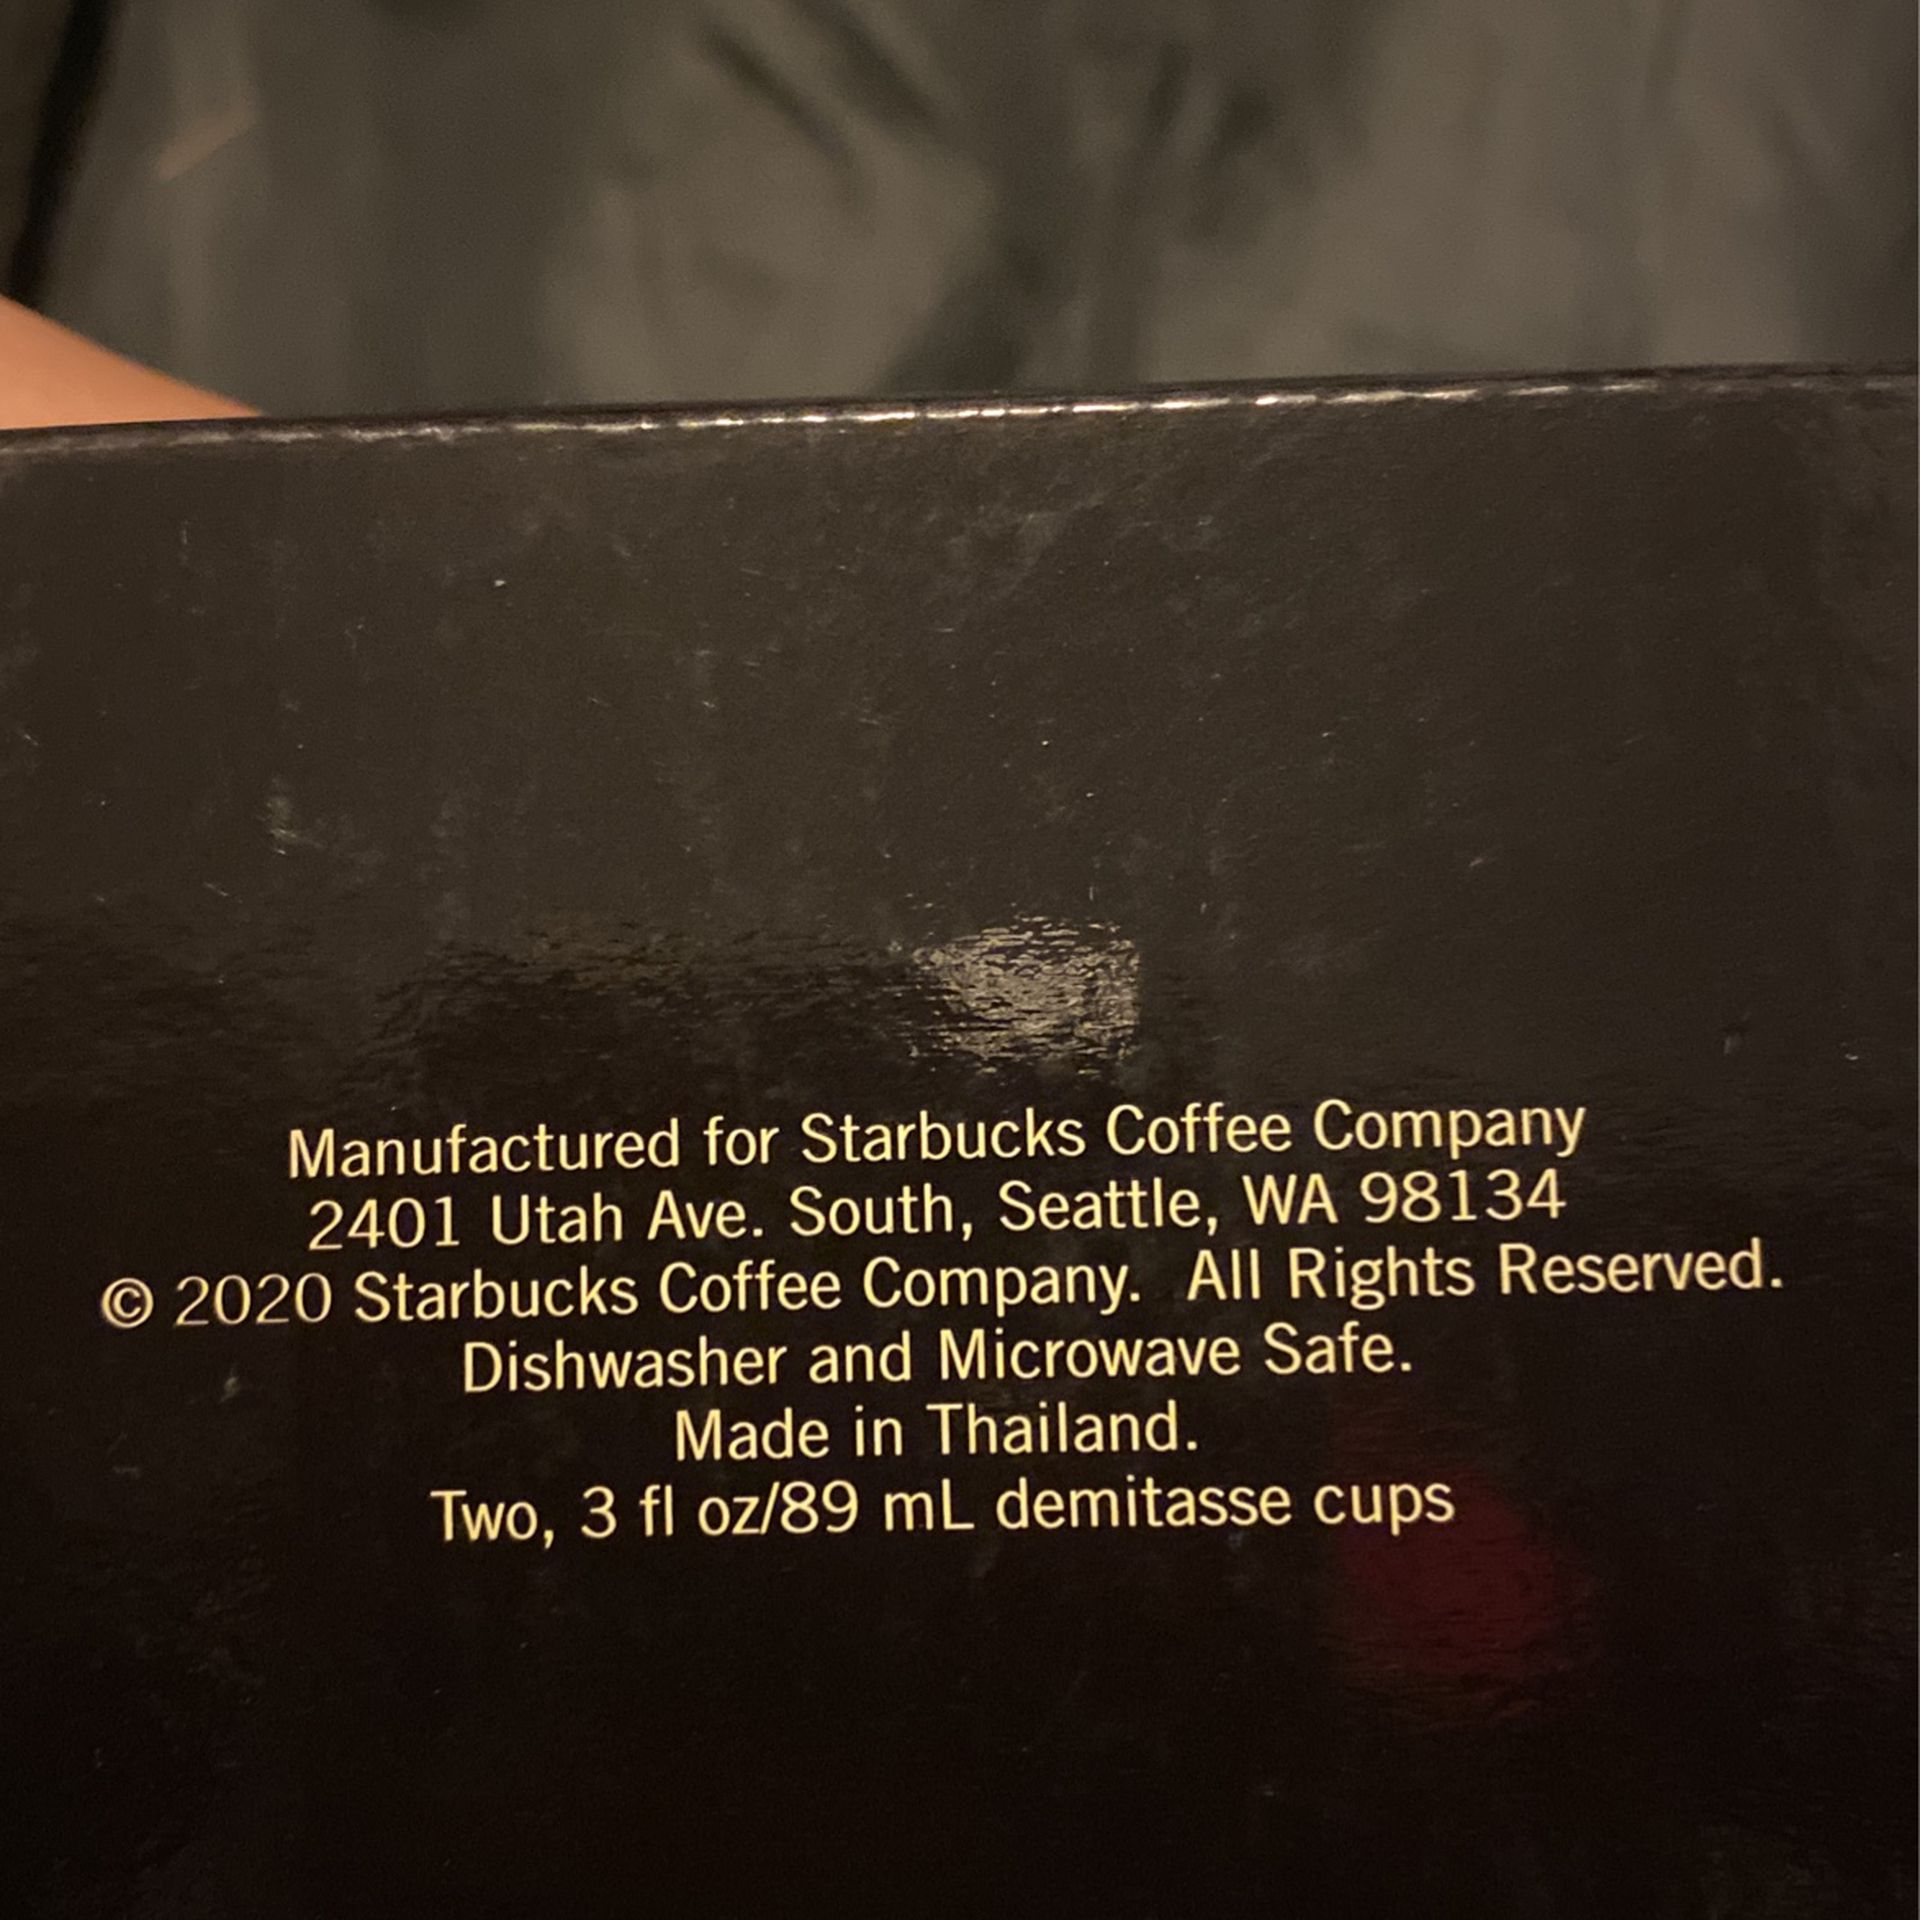 Starbucks demitasse cups from Thailand